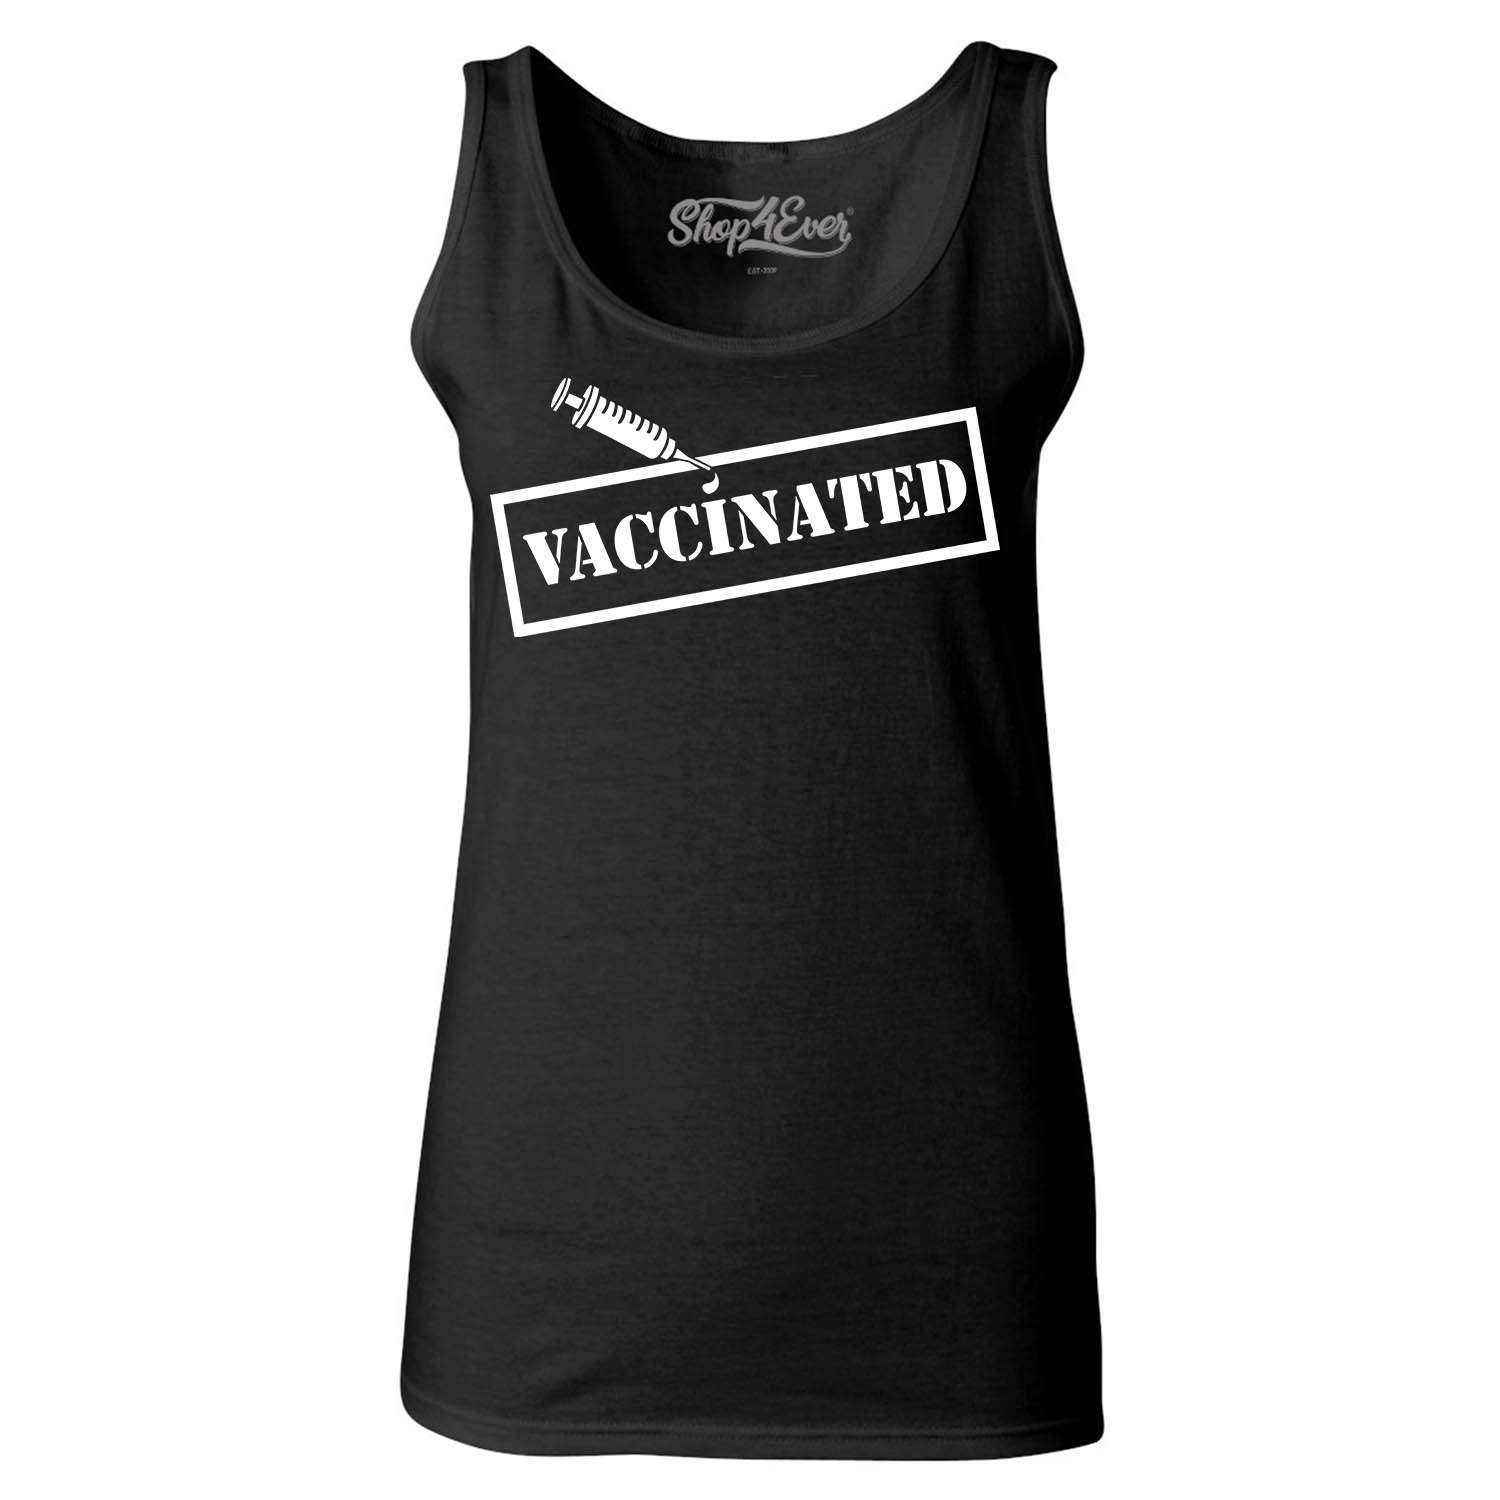 Vaccines caue adults pro-vaccine tank top vaccines save funny nurse shirt nurselife nurse gift funny doctor shirt funny provaccine racerback